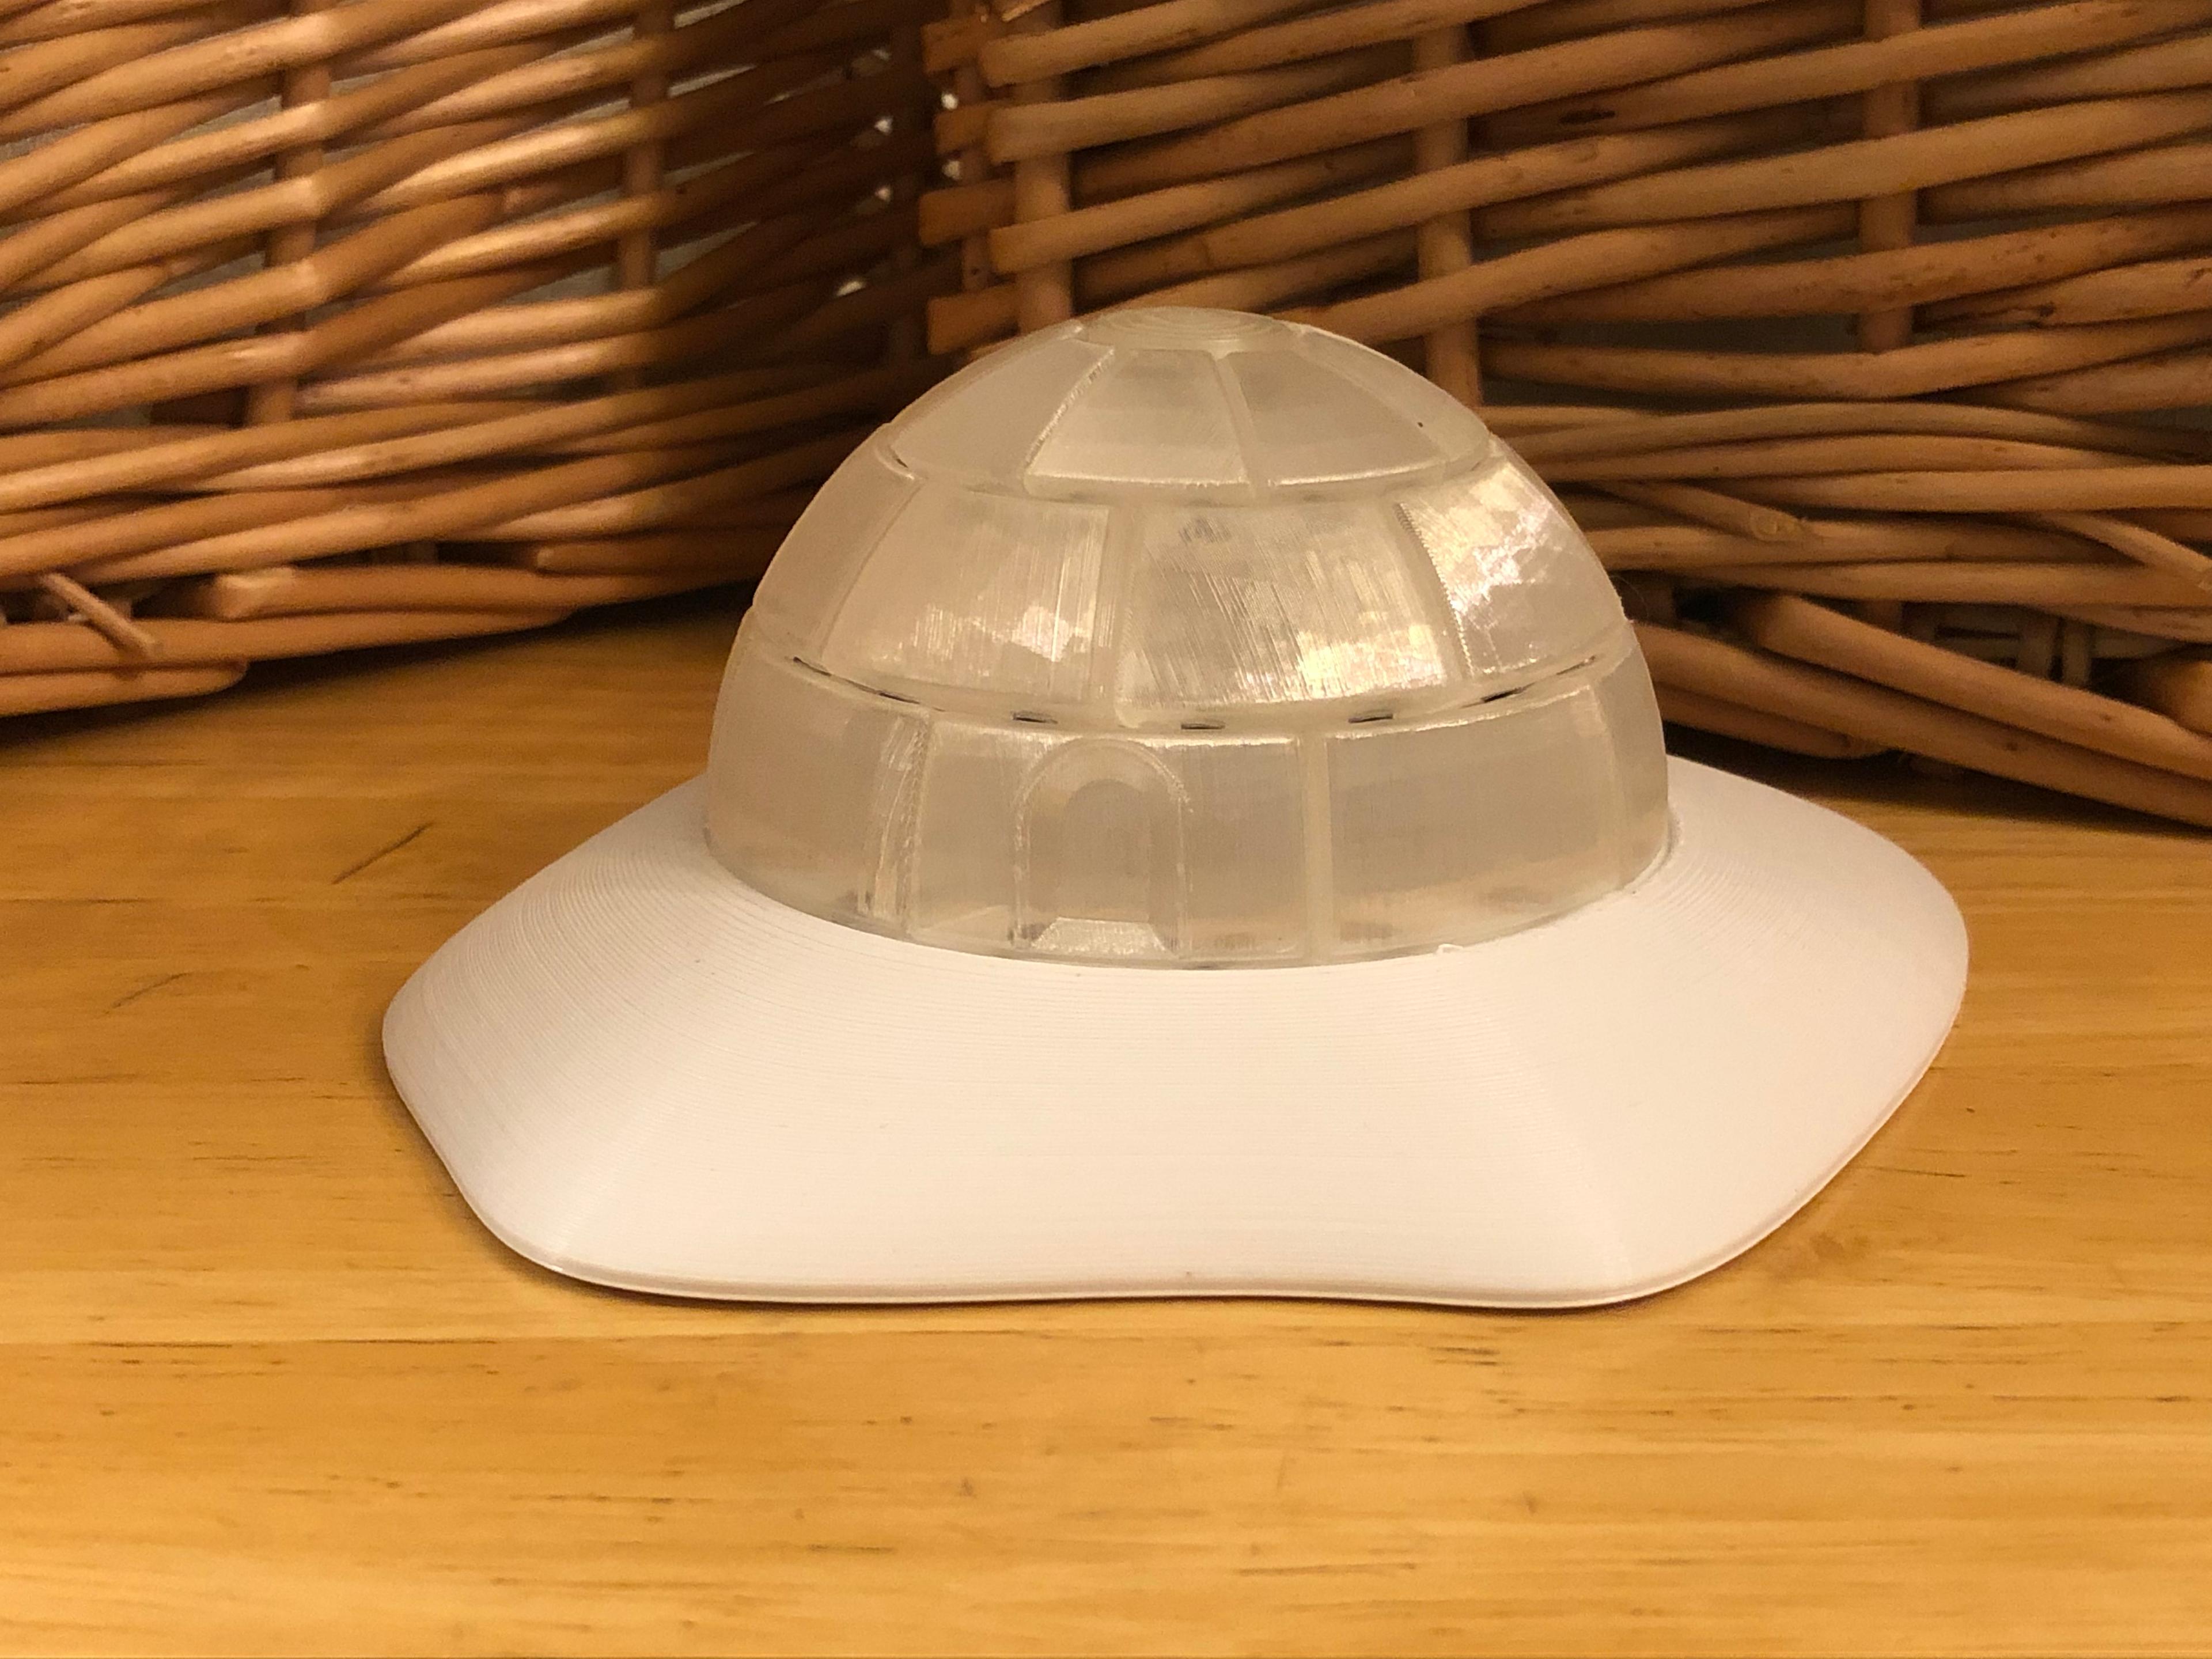 Interactive Glowing Igloo Lamp 3d model